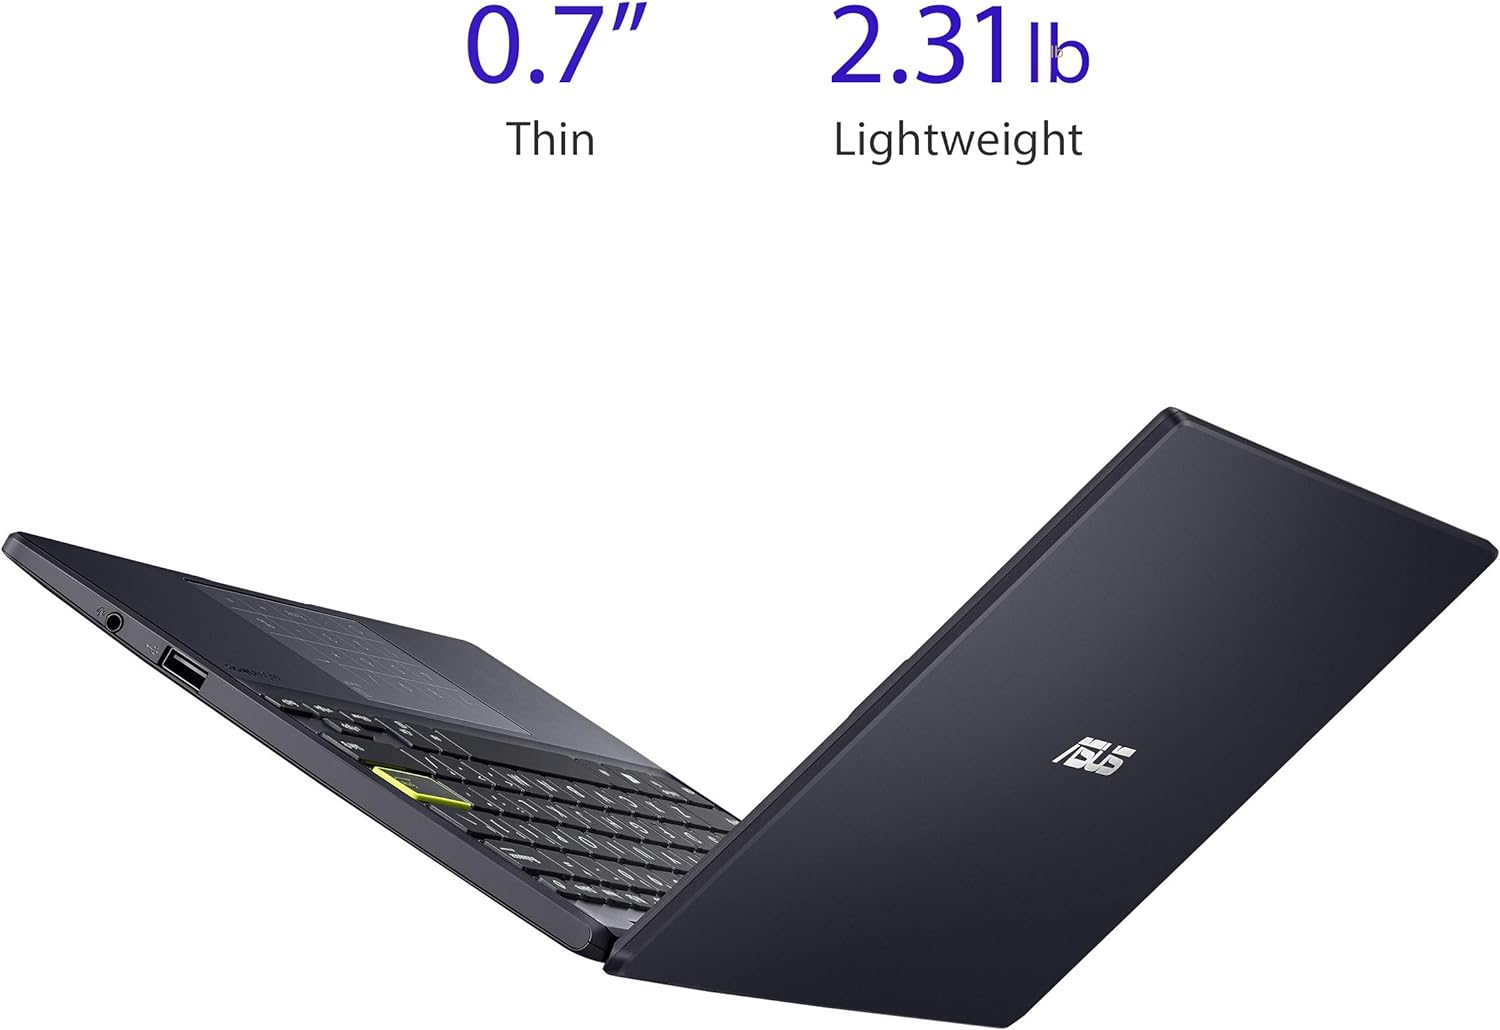 ASUS Notebook E210 11.6” Ultra Thin, Intel Celeron N4020 Processor - $150